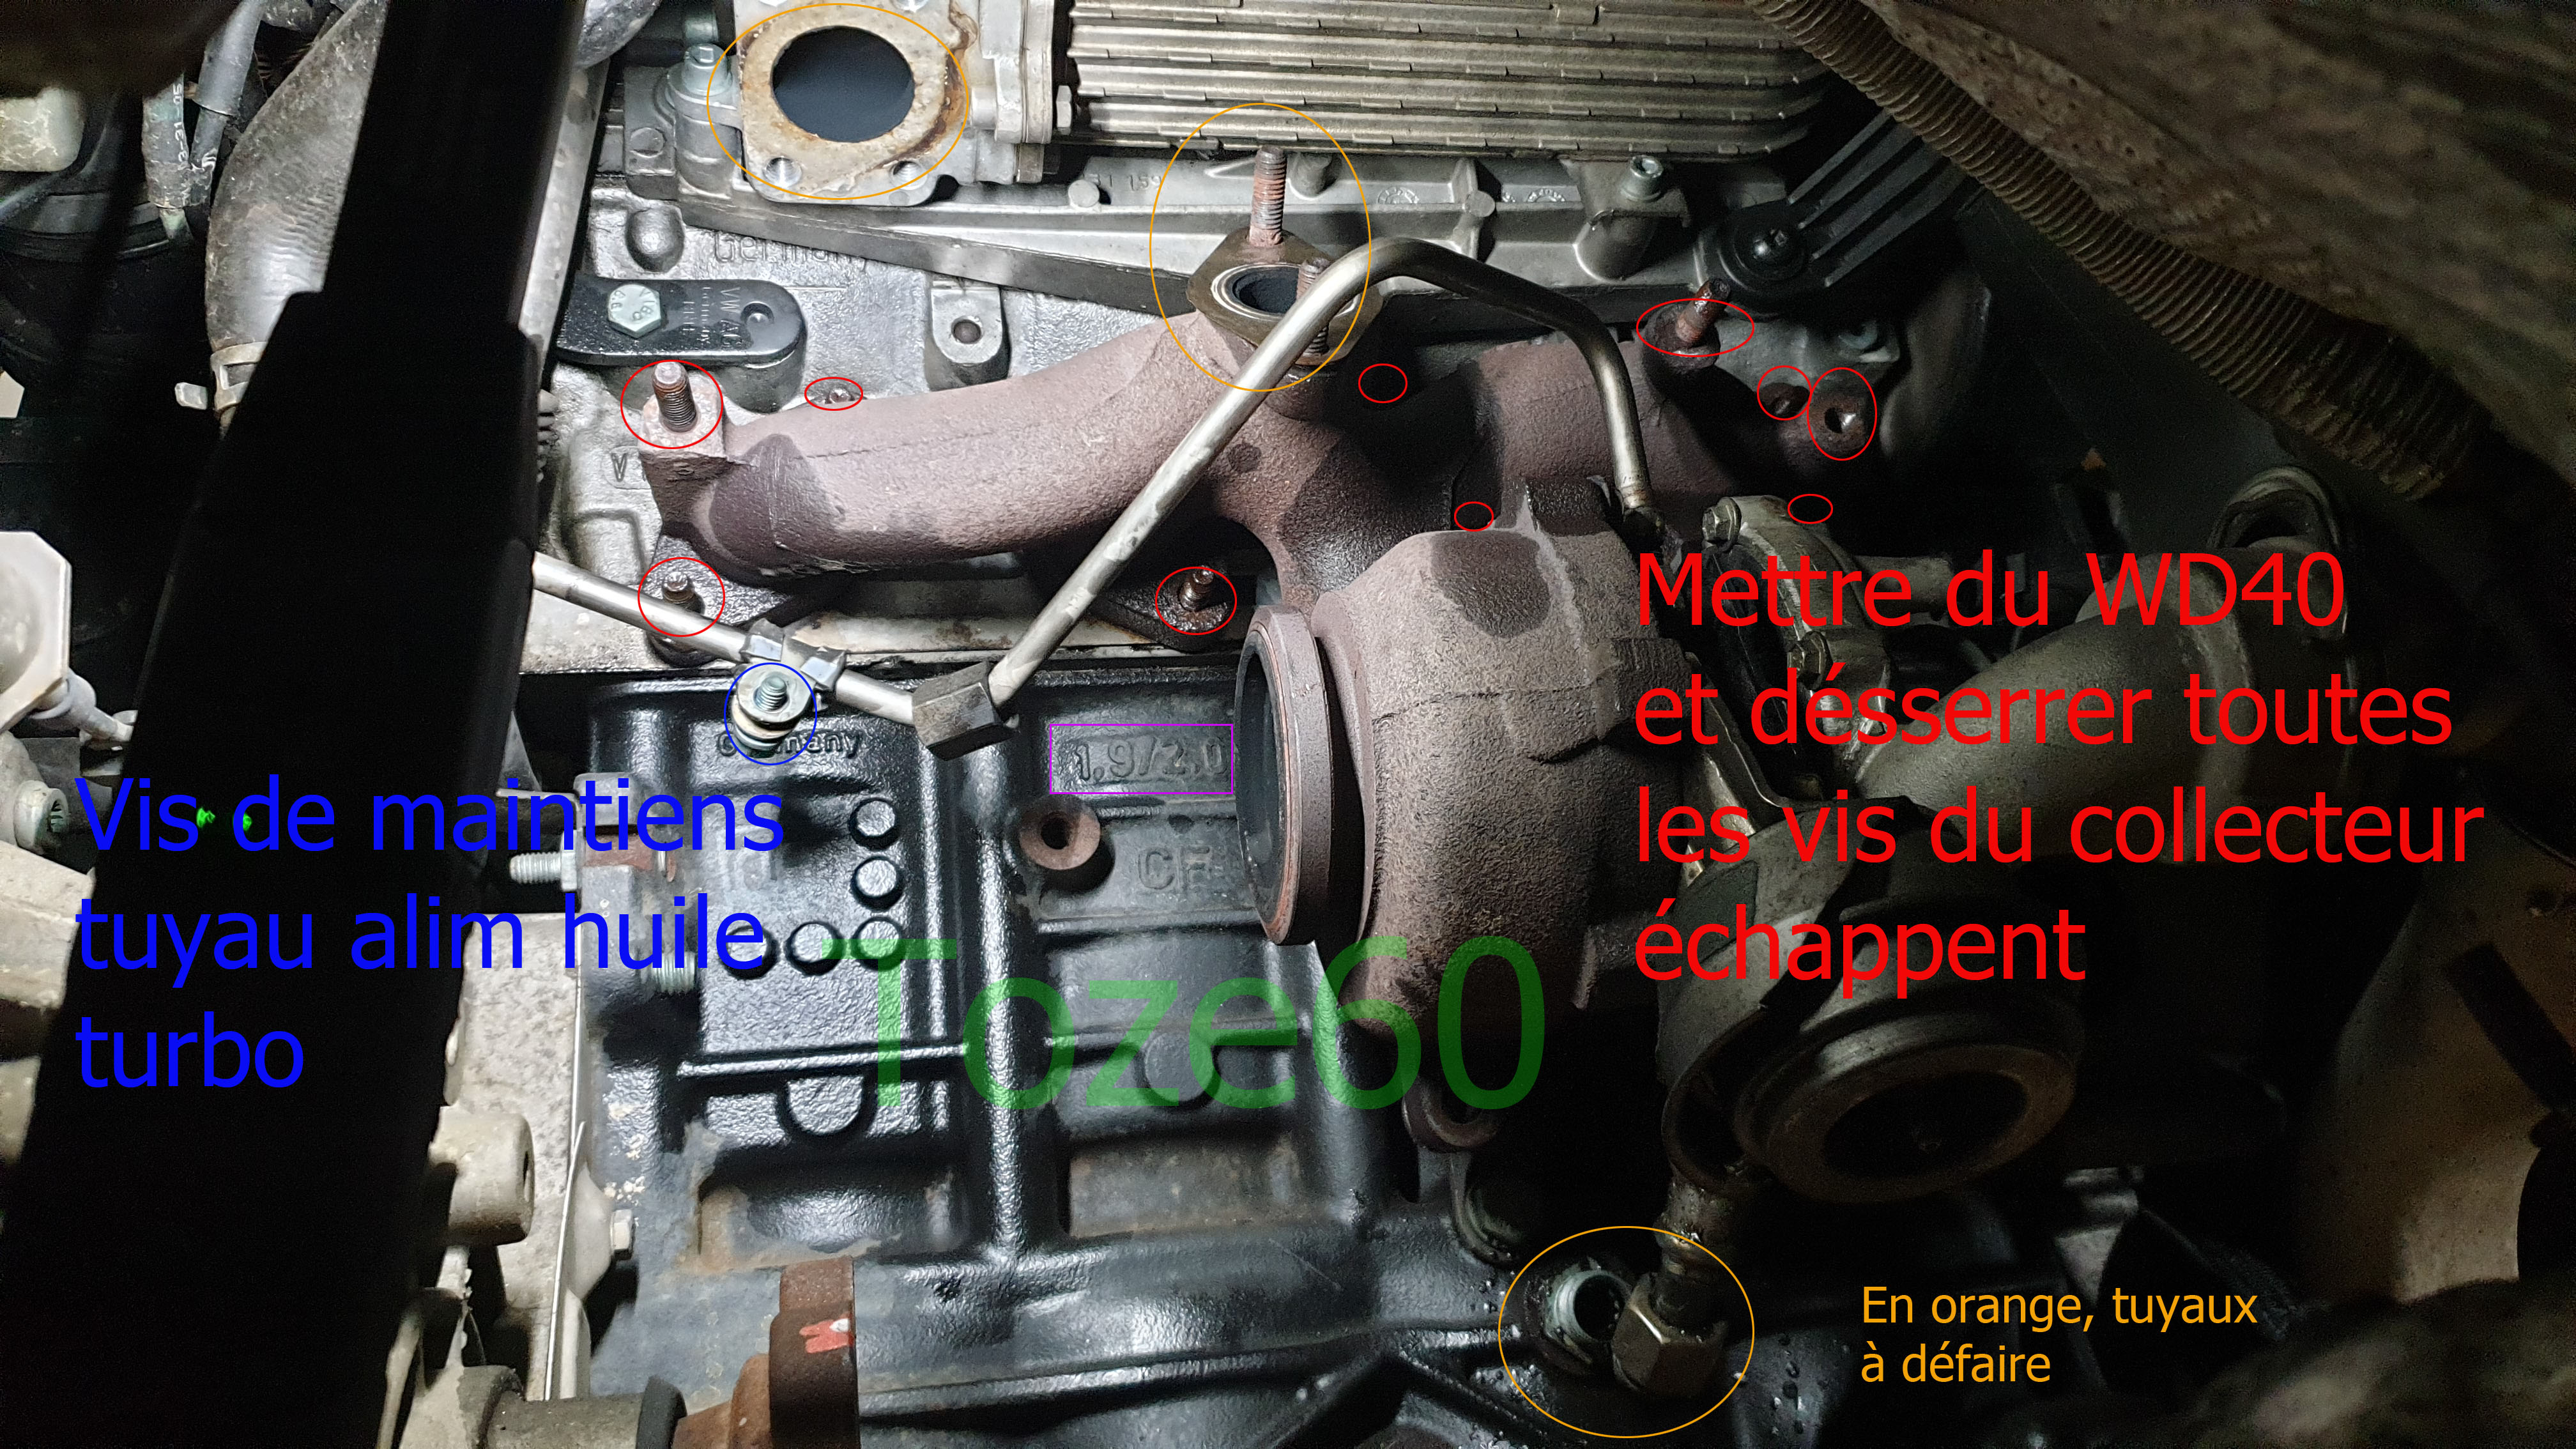 Tuto ]Démontage Turbo Tdi 170,140,105,90 et Nettoyage GM